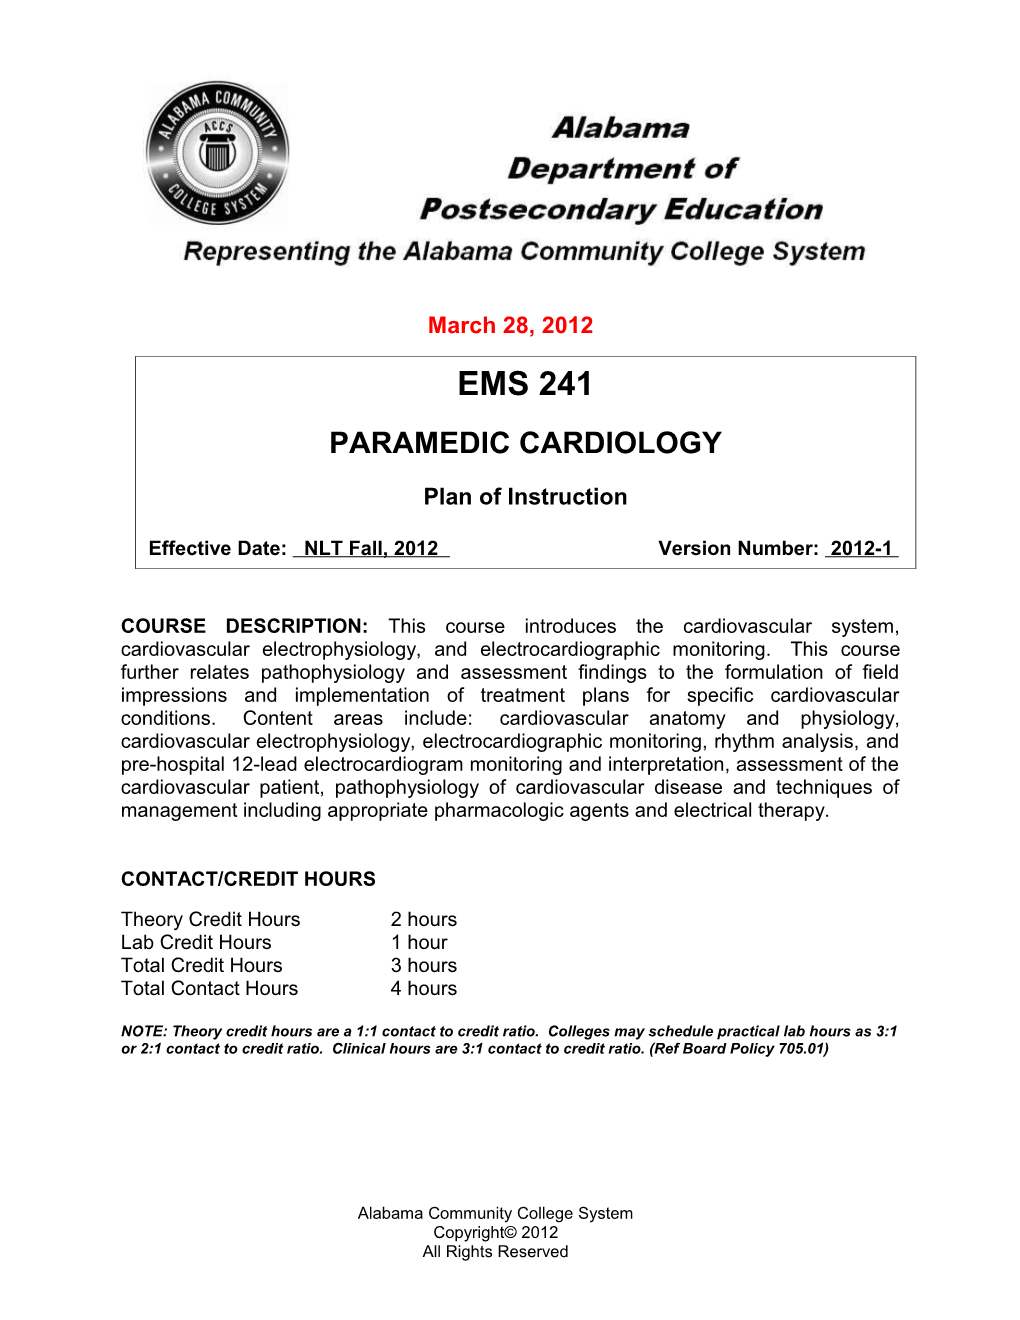 Paramedic Cardiacems 241